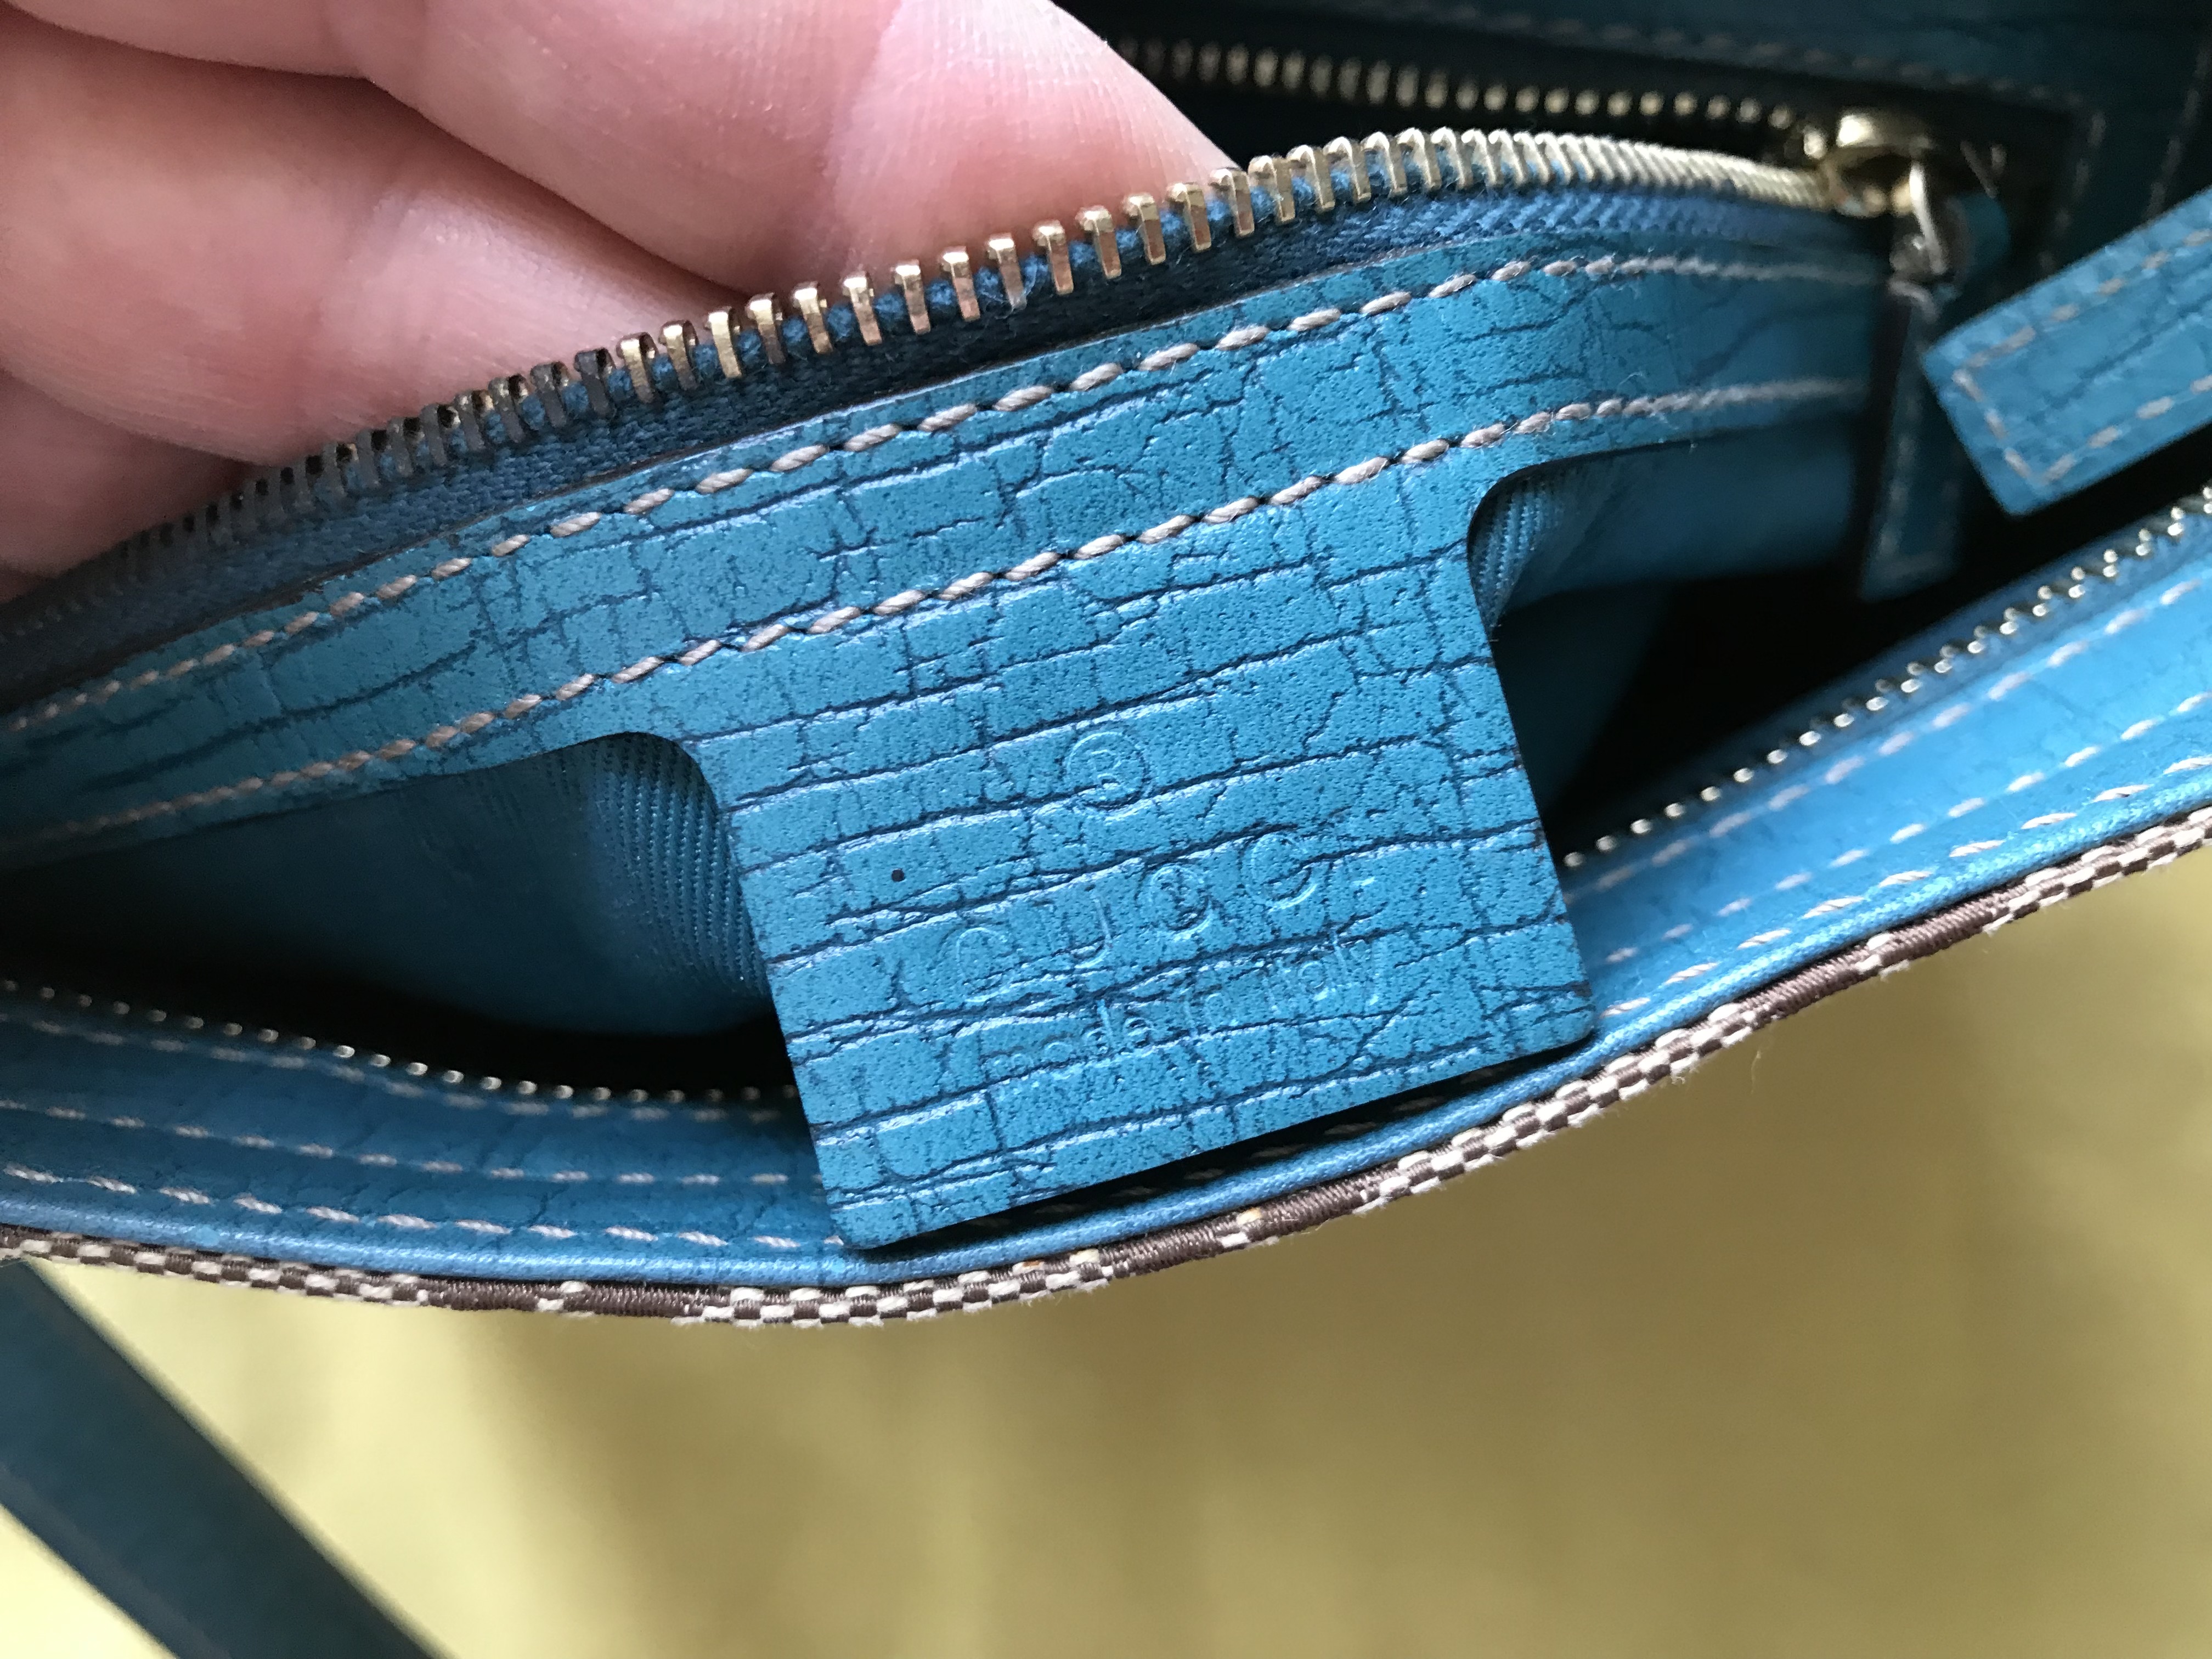 Gucci Horsebit Crossbody Bag